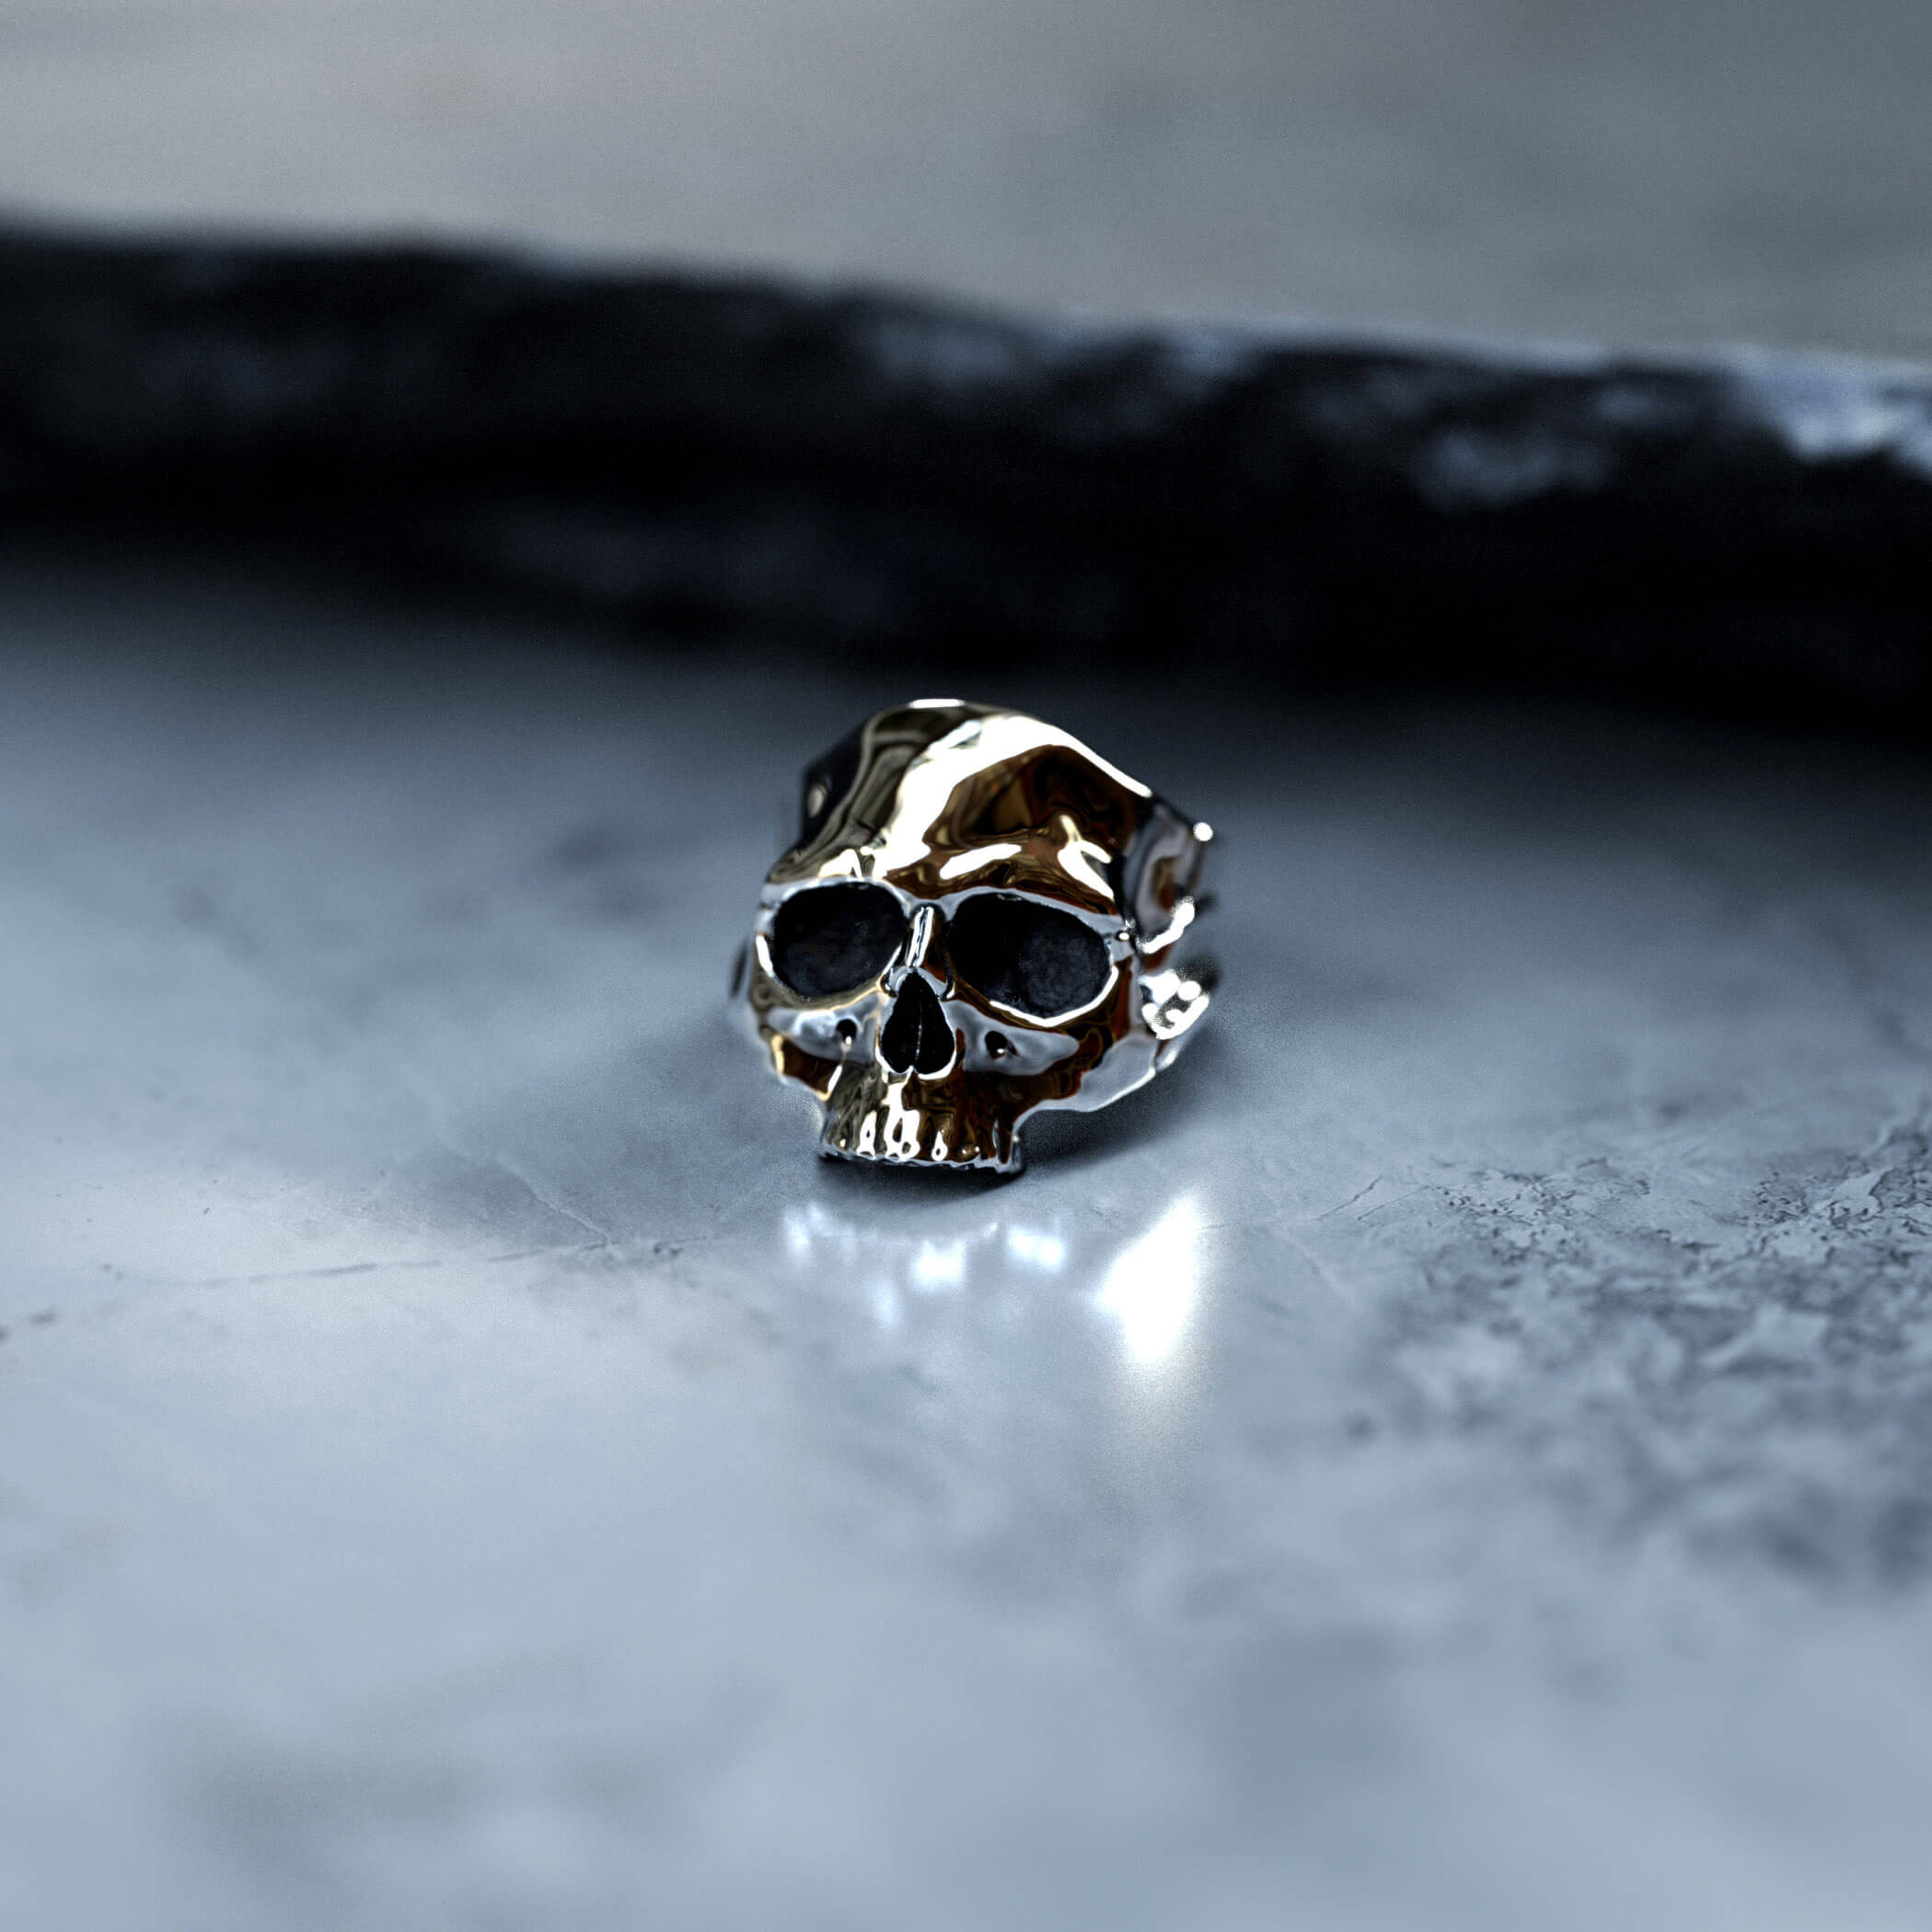 Silver Skull Ring 925 Silver - Viking Jewelry - Urcsilver